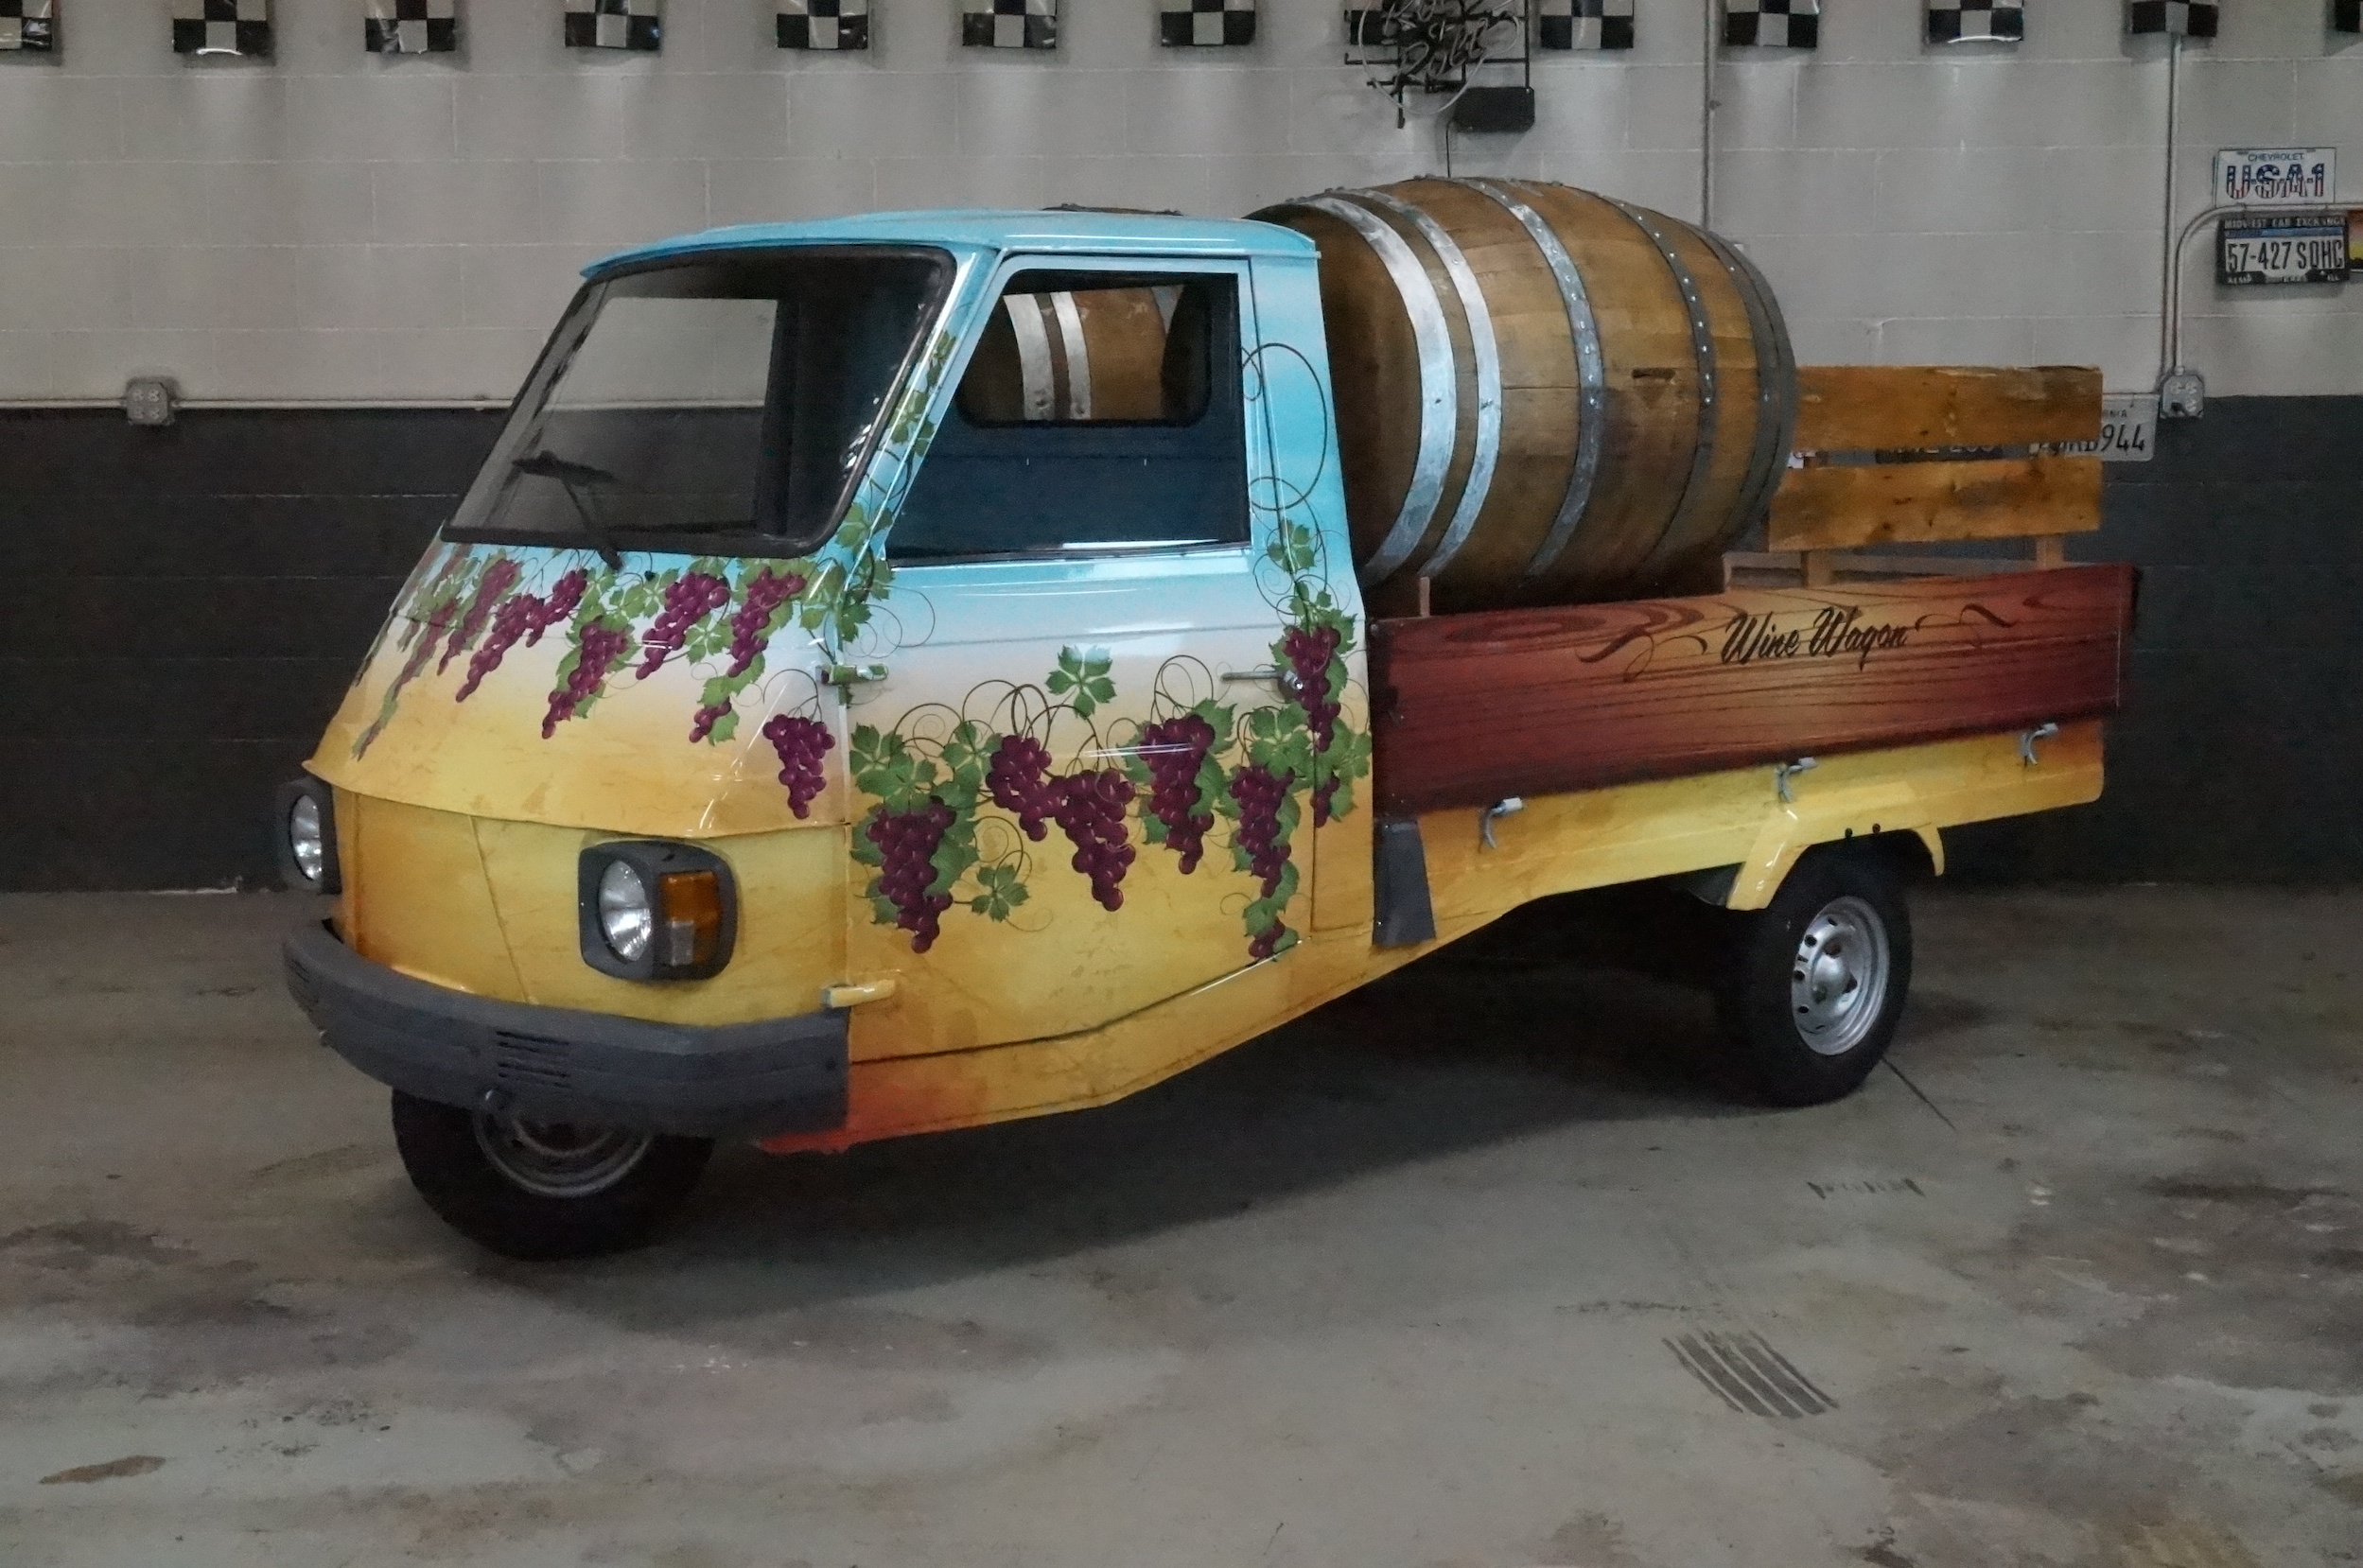 The Little Wine Wagon